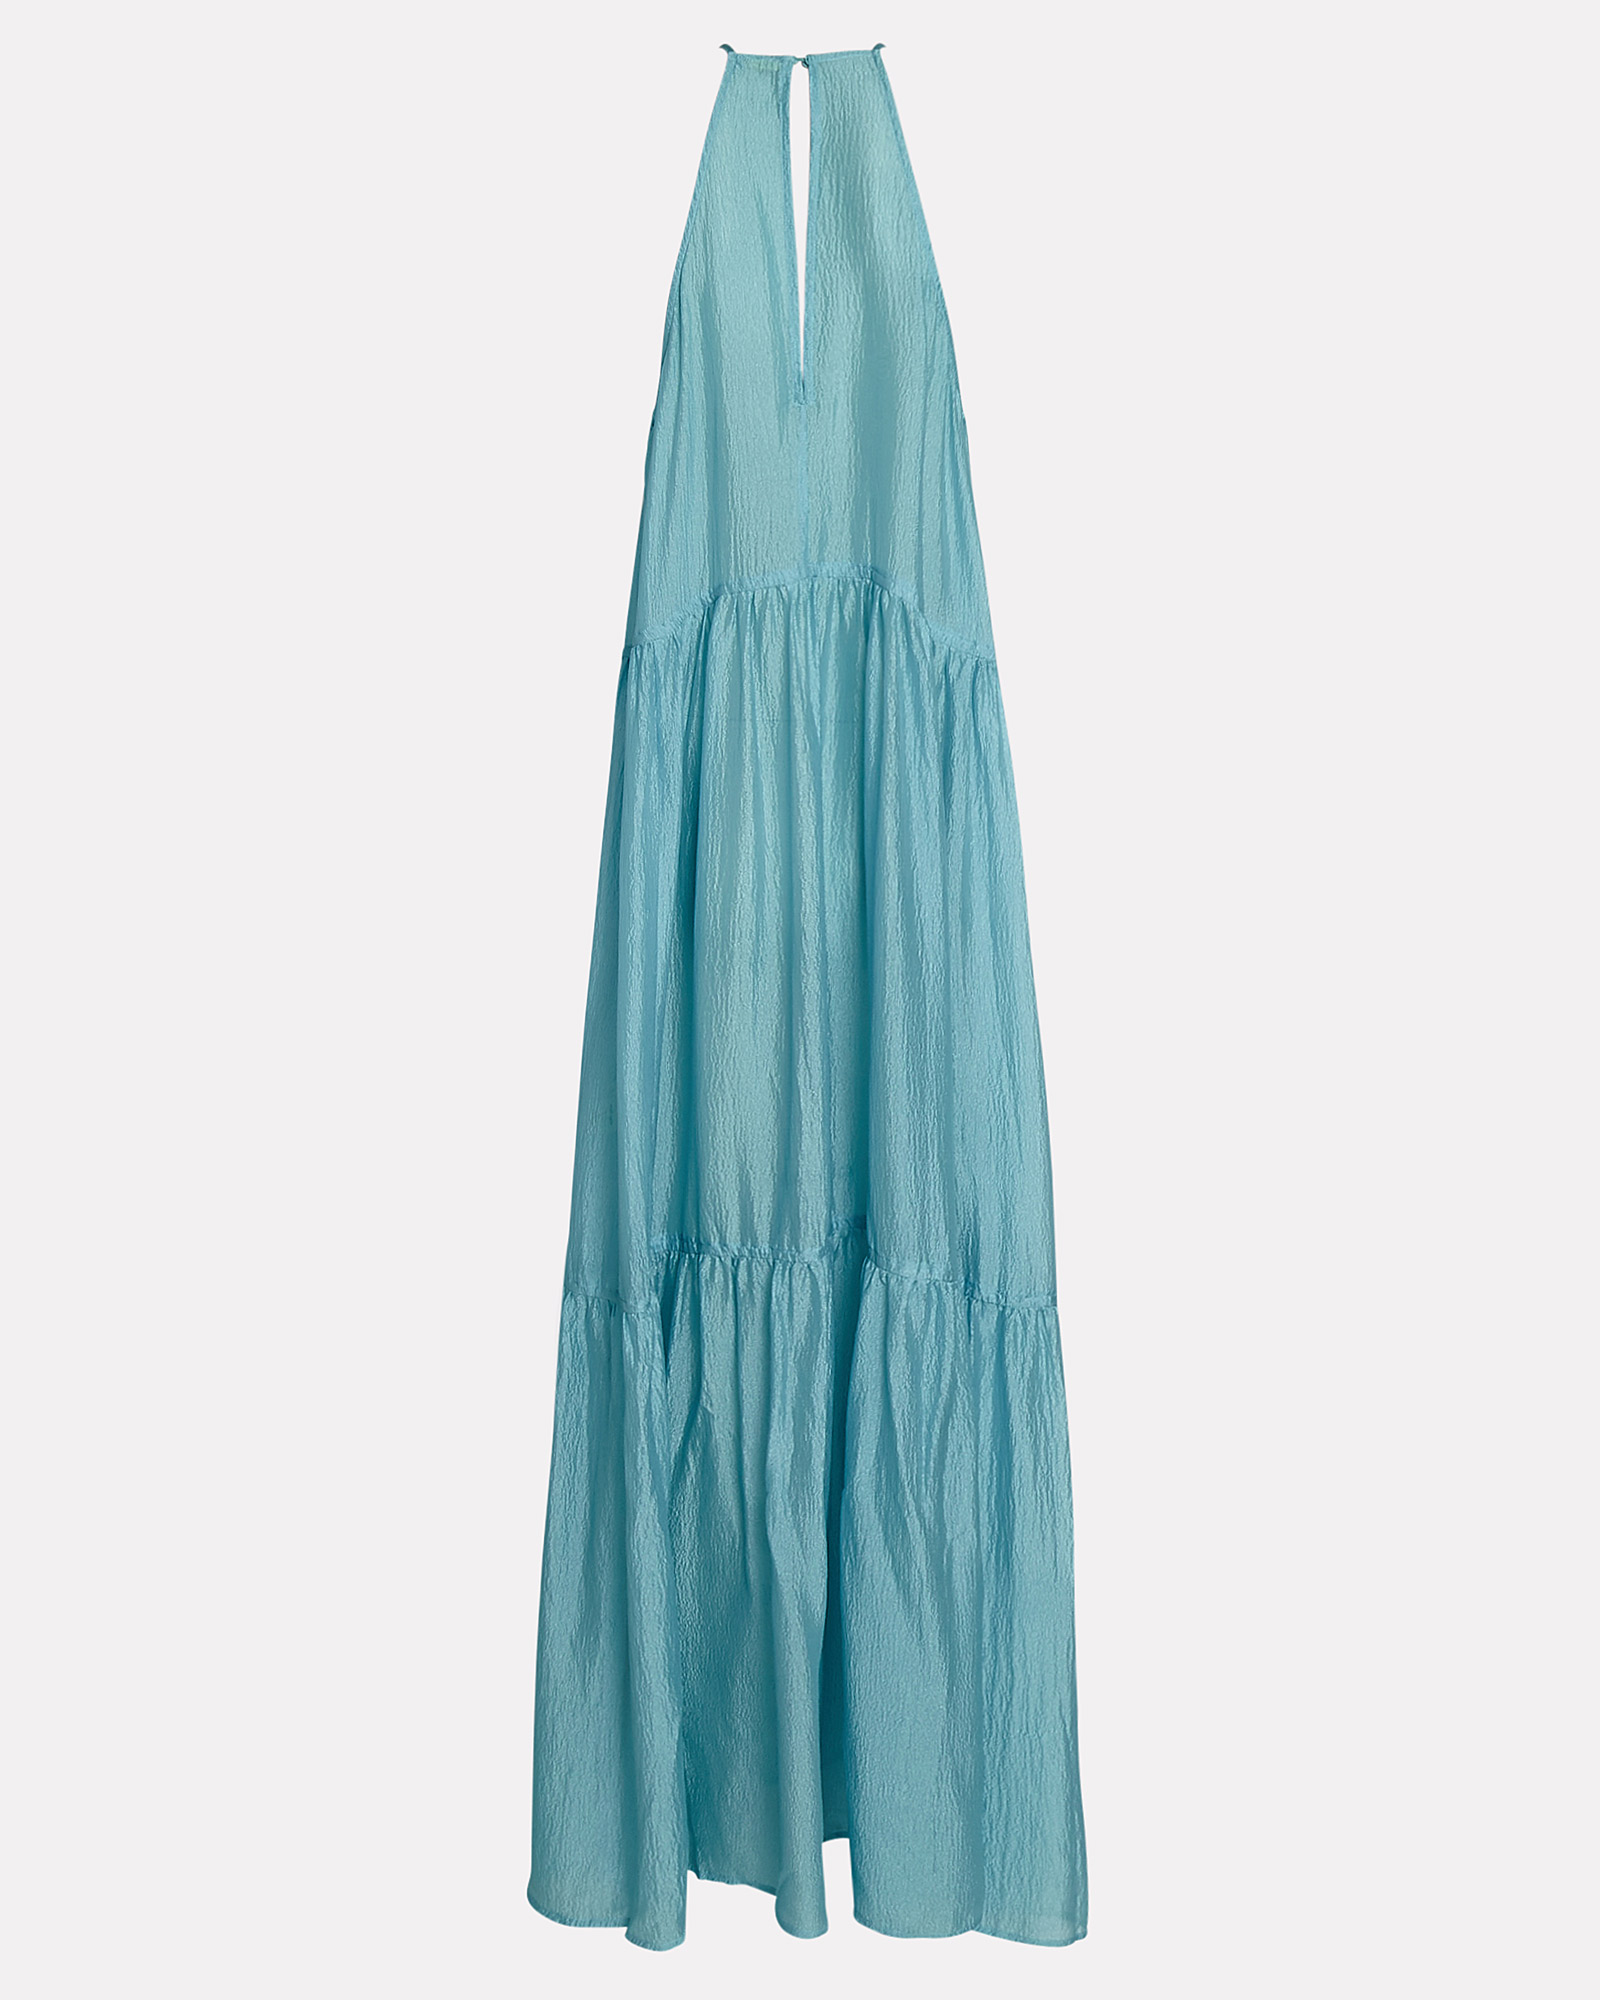 Cult Gaia Lucinda Tiered Silk Dress | INTERMIX®